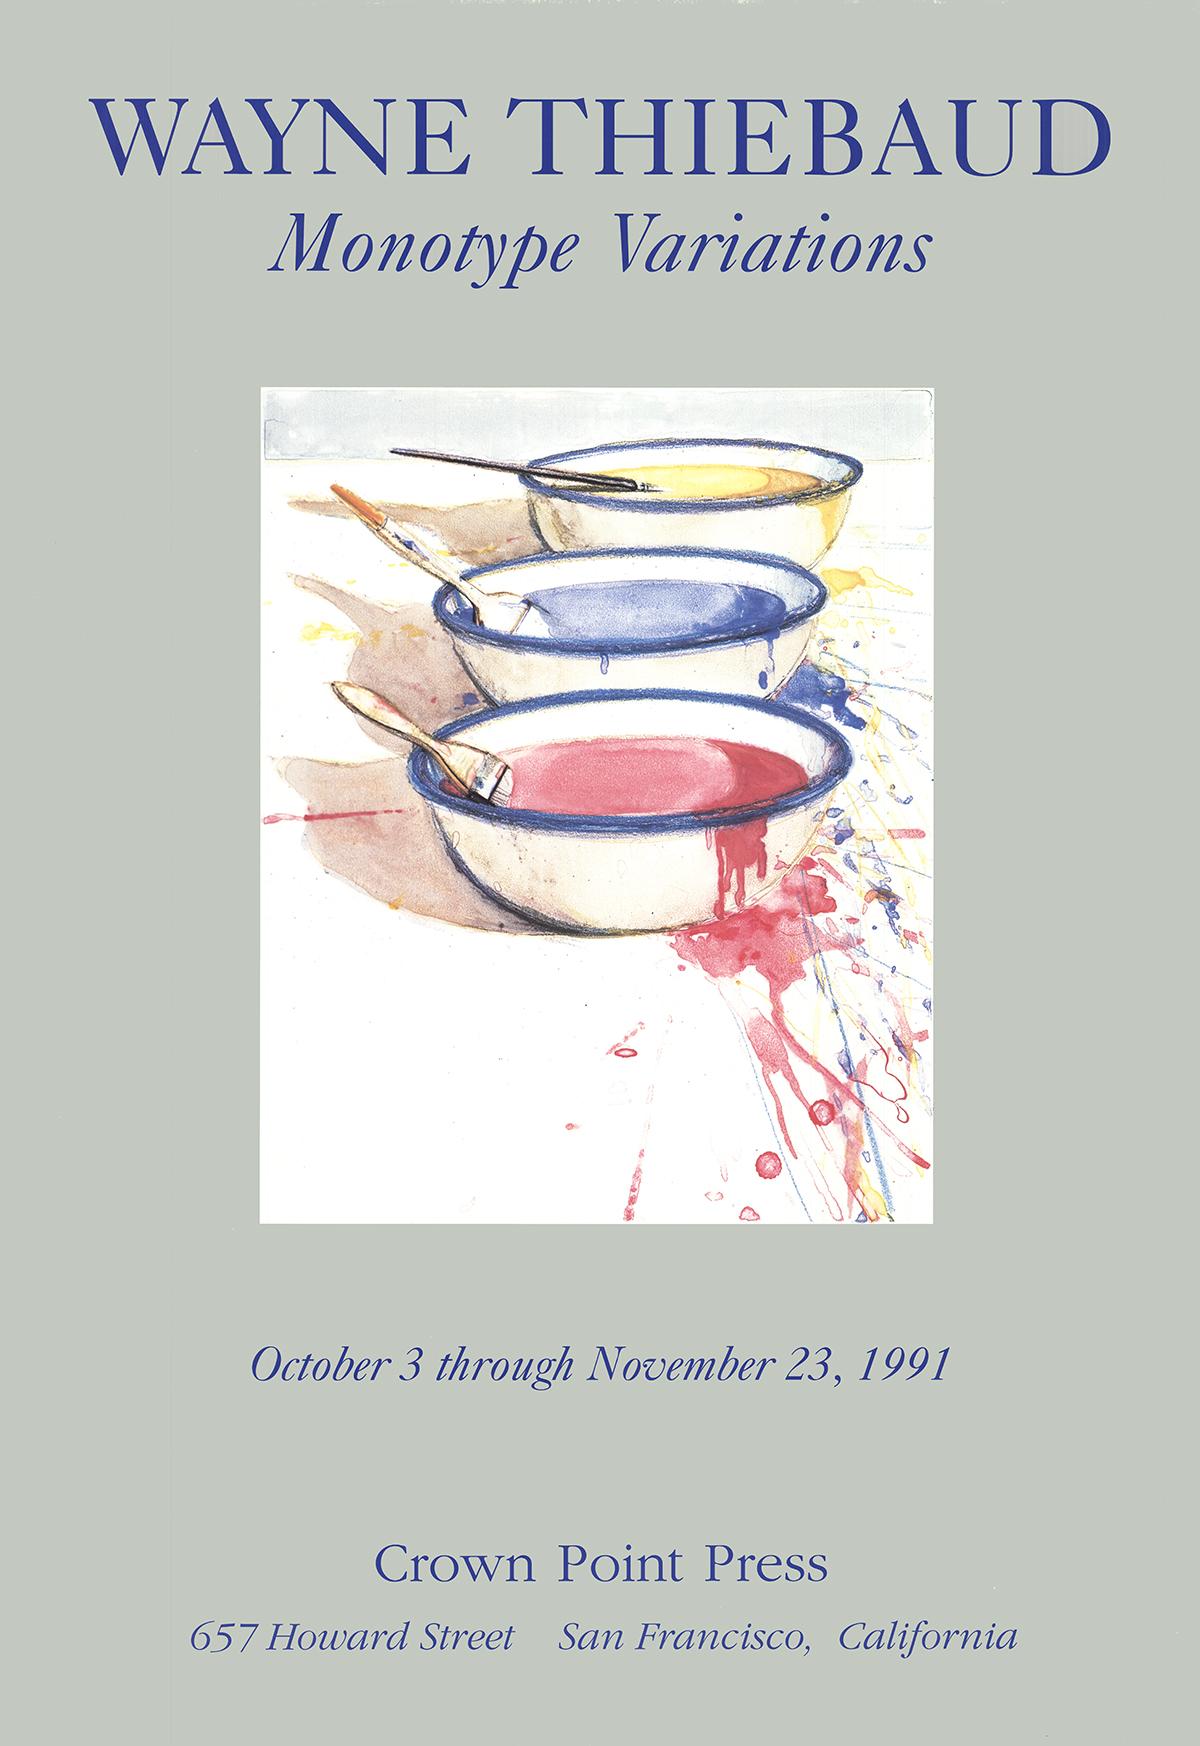 Wayne  Thiebaud-Monotype Variations-Original Exhibition Poster - Print by Wayne Thiebaud